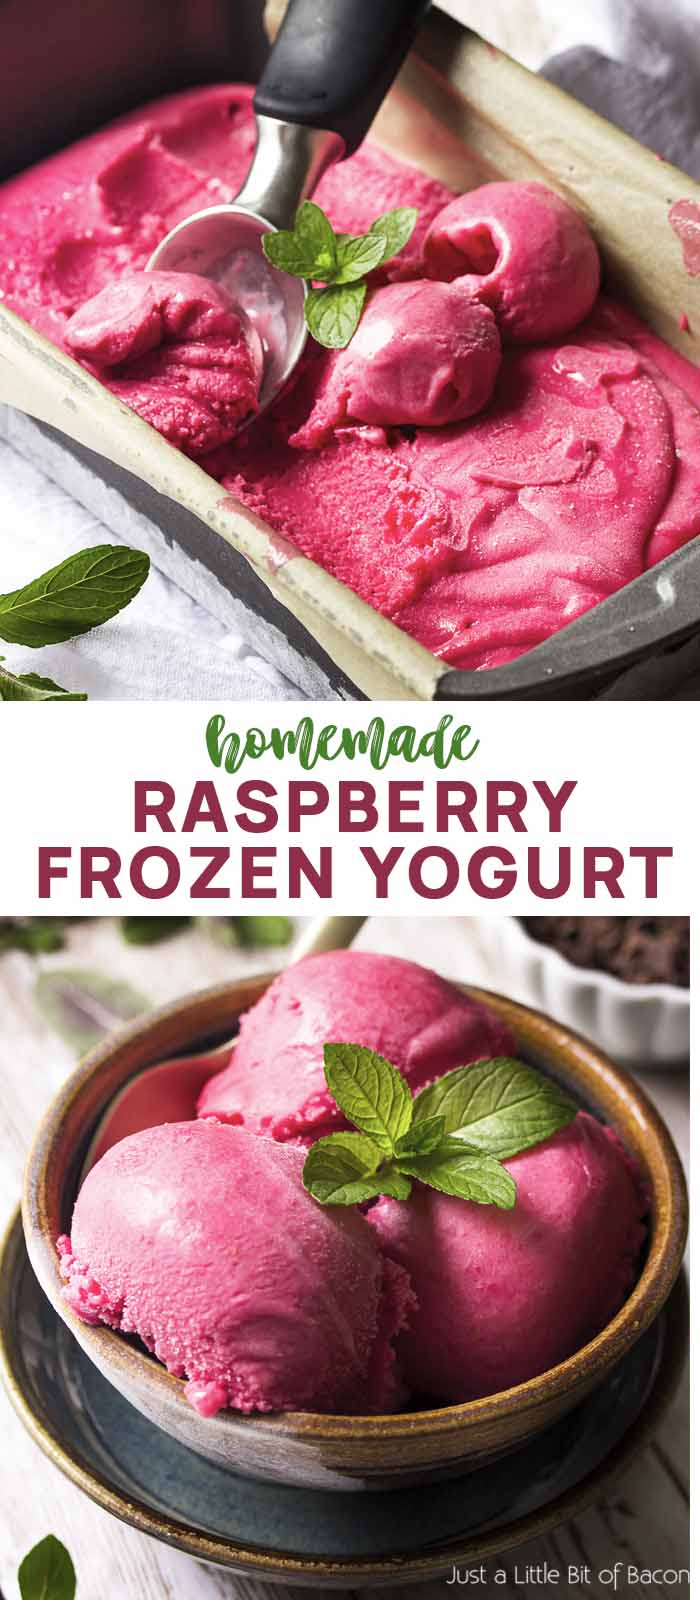 Metal loaf pan and bowl of deep pink frozen yogurt with text overlay - Raspberry Frozen Yogurt.